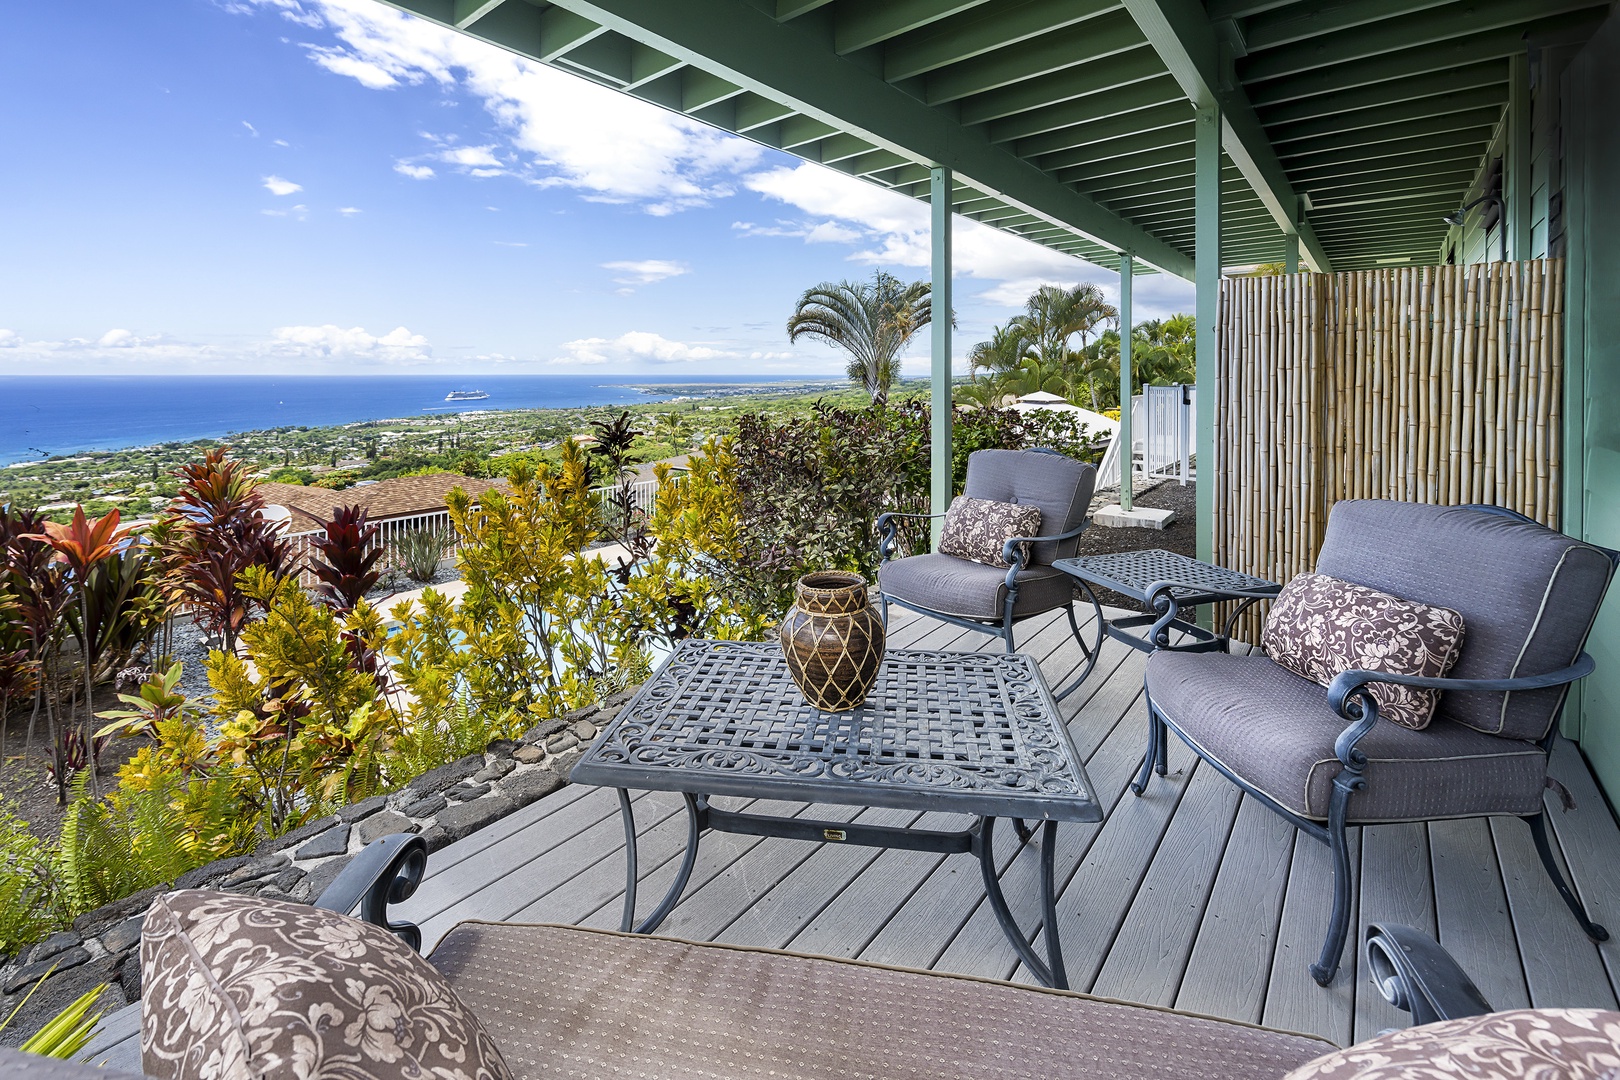 Kailua Kona Vacation Rentals, Ho'o Maluhia - Outdoor seating and outdoor shower area